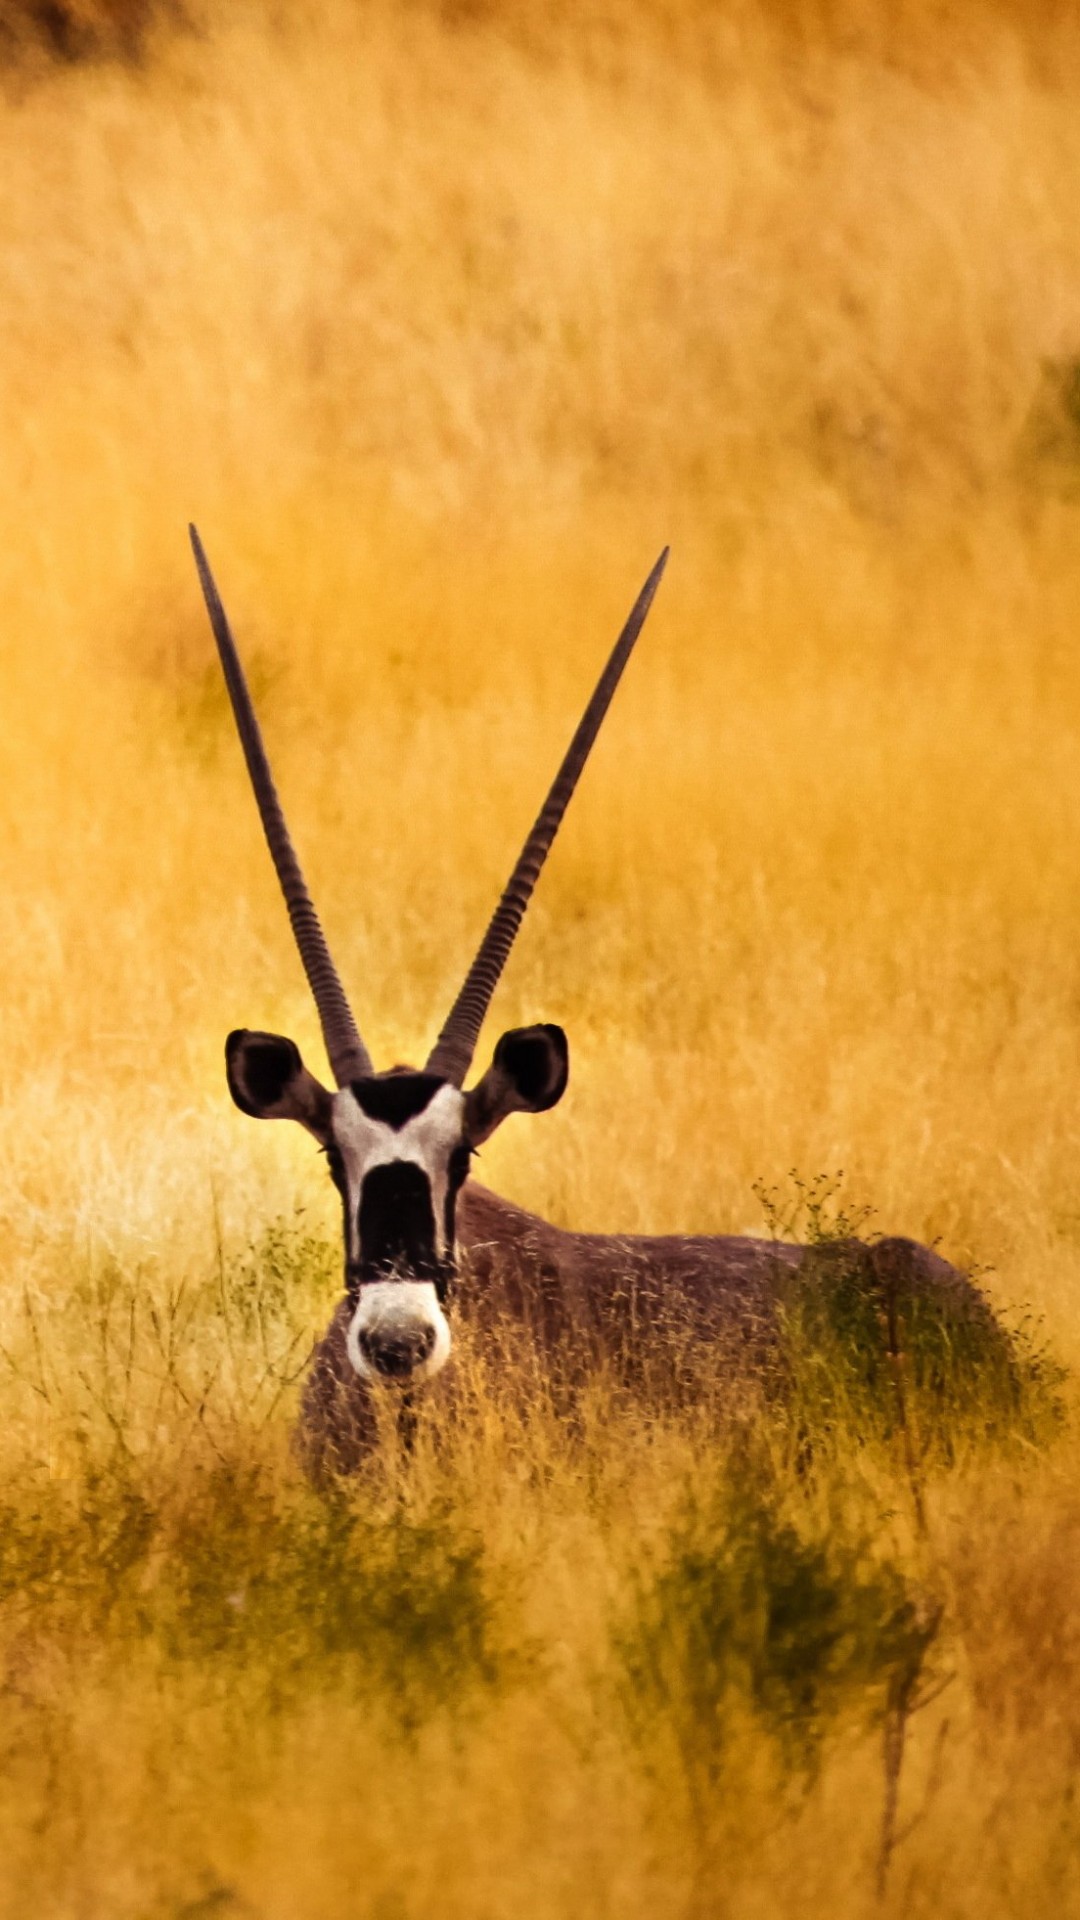 Antelope In The Savanna Wallpaper for Google Nexus 5X